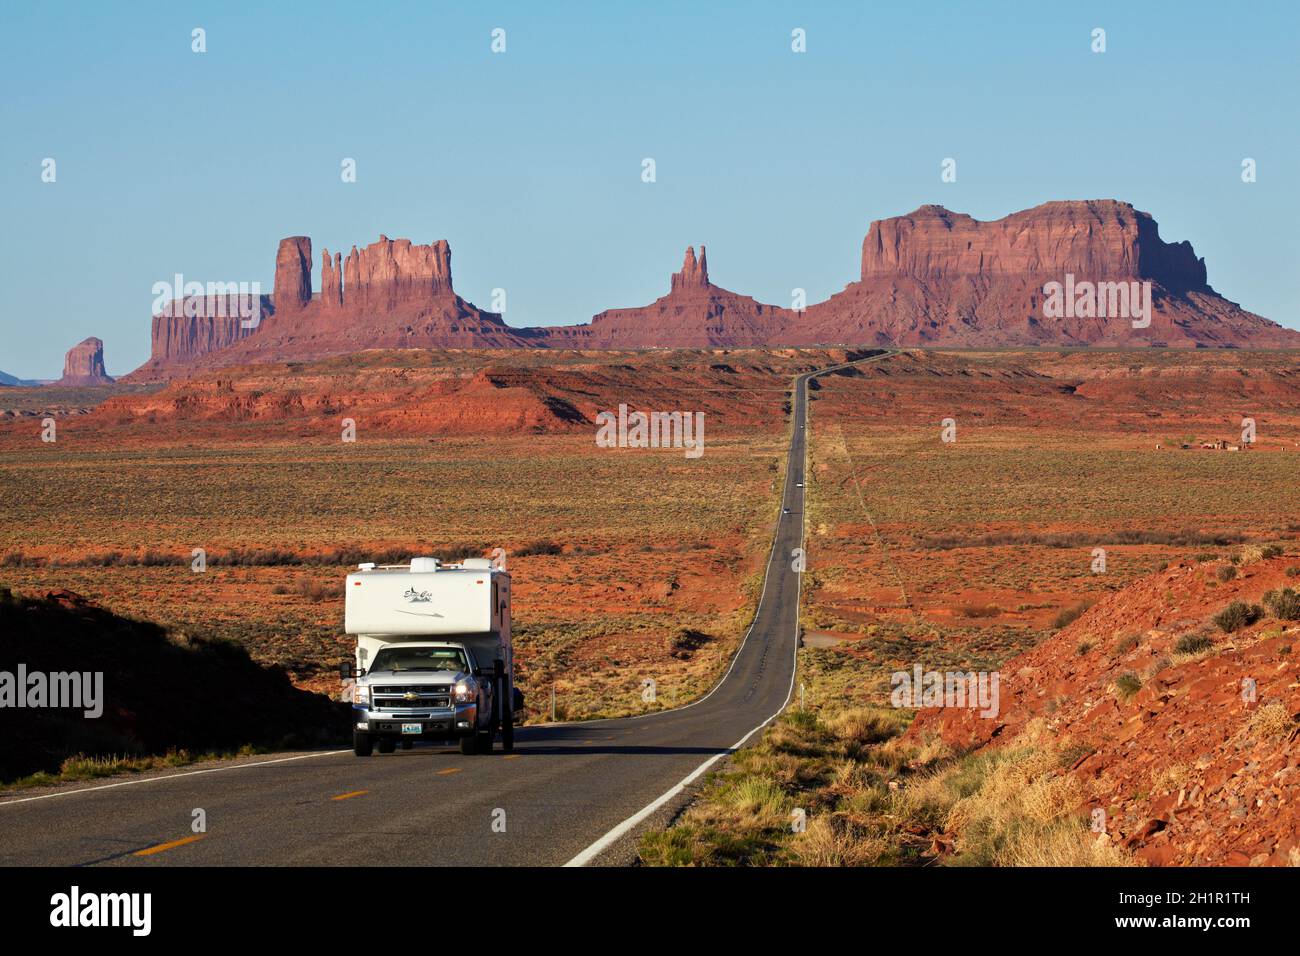 RV on U.S. Route 163, Monument Valley, Navajo Nation, Utah, near Arizona Border, USA Stock Photo